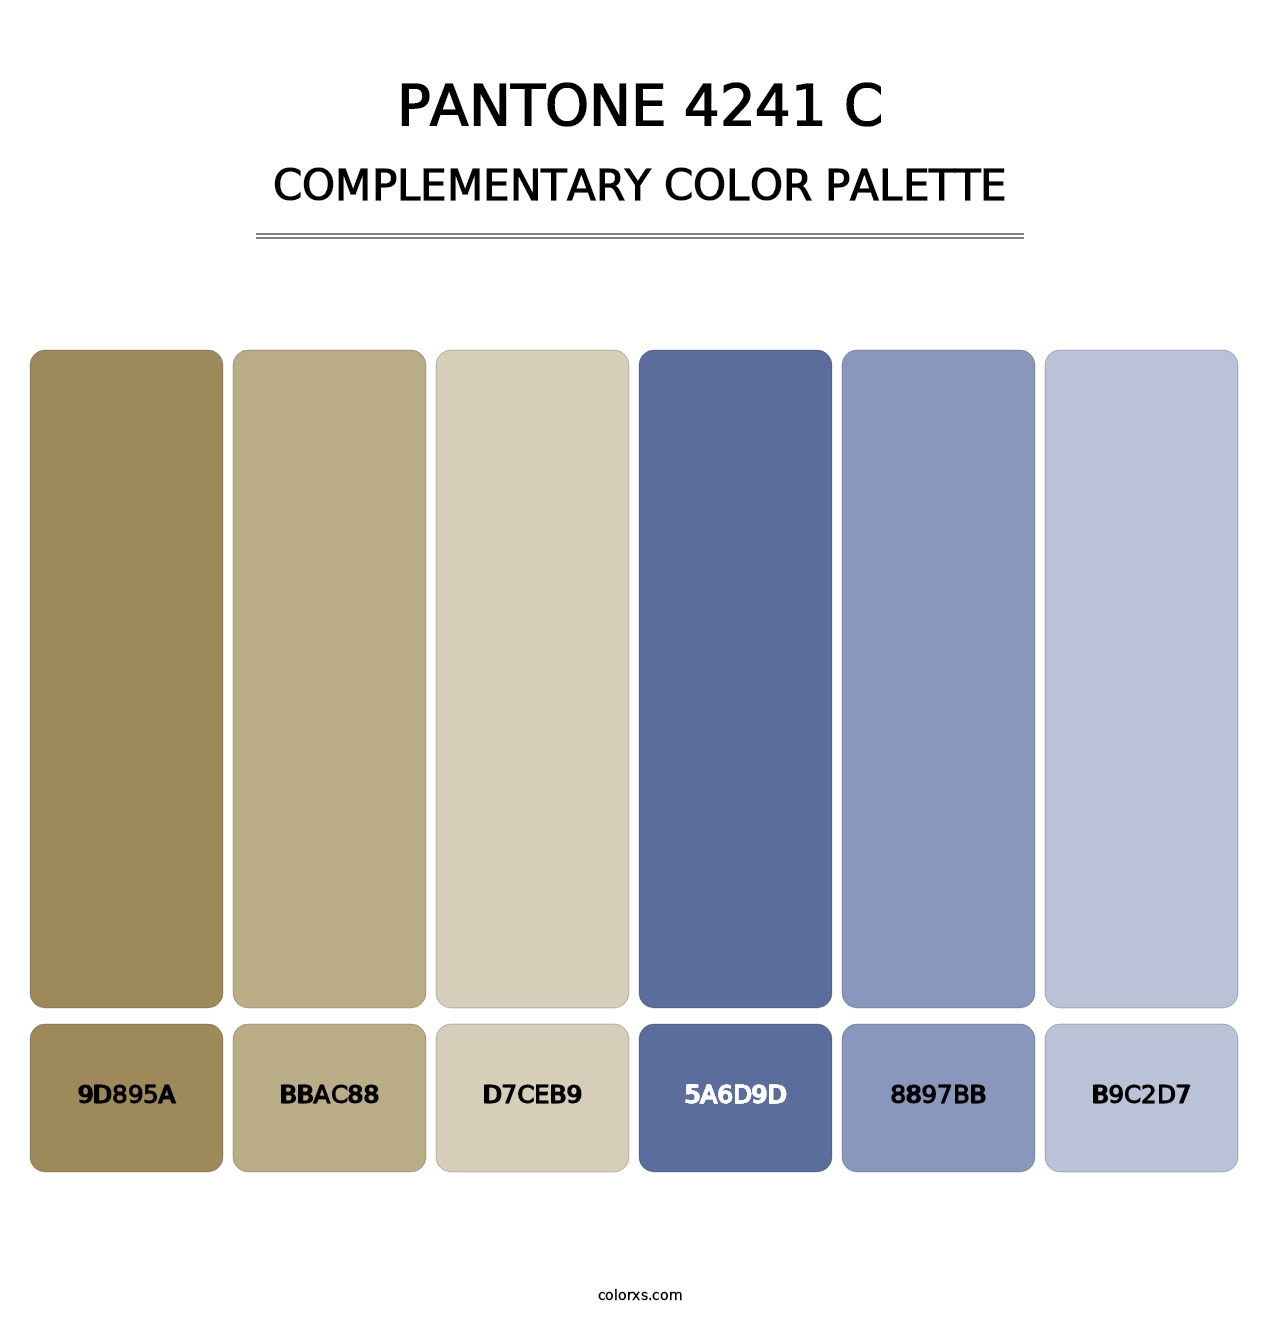 PANTONE 4241 C - Complementary Color Palette